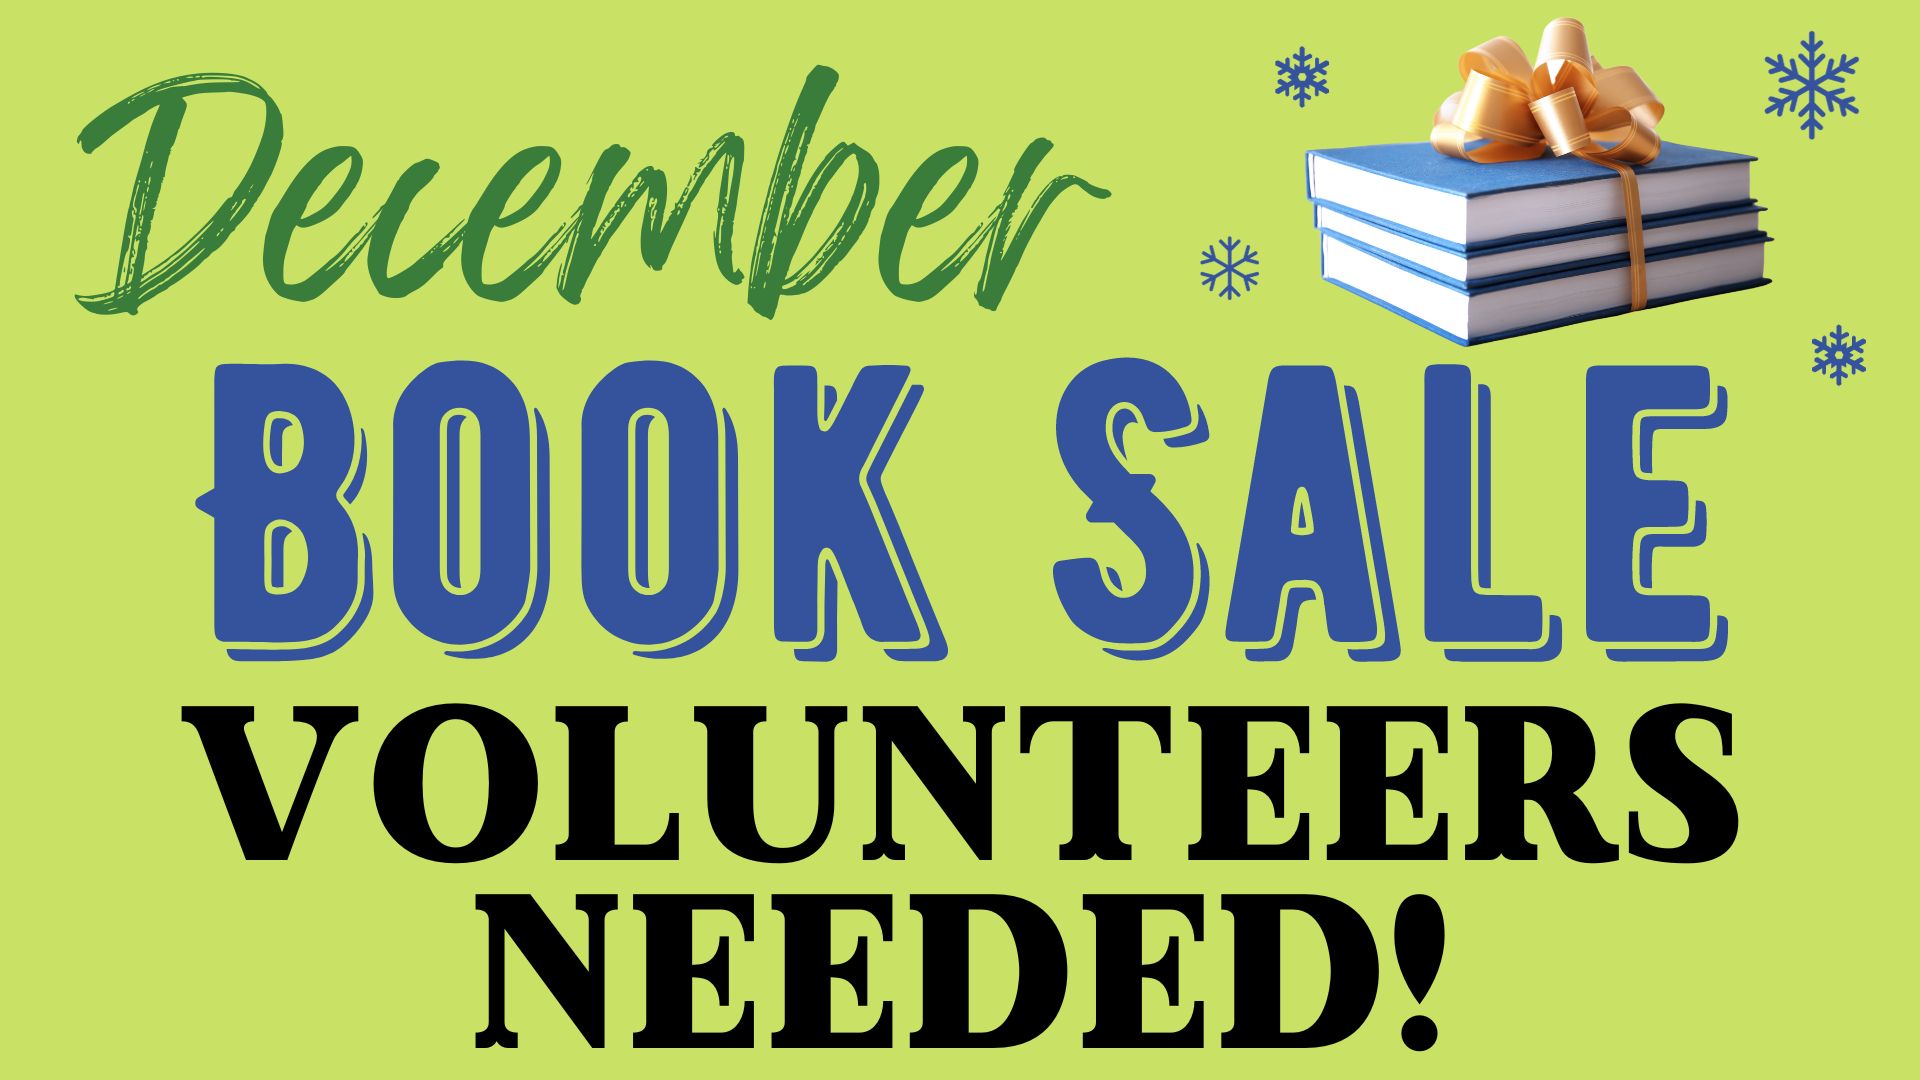 December Book Sale Volunteers Needed